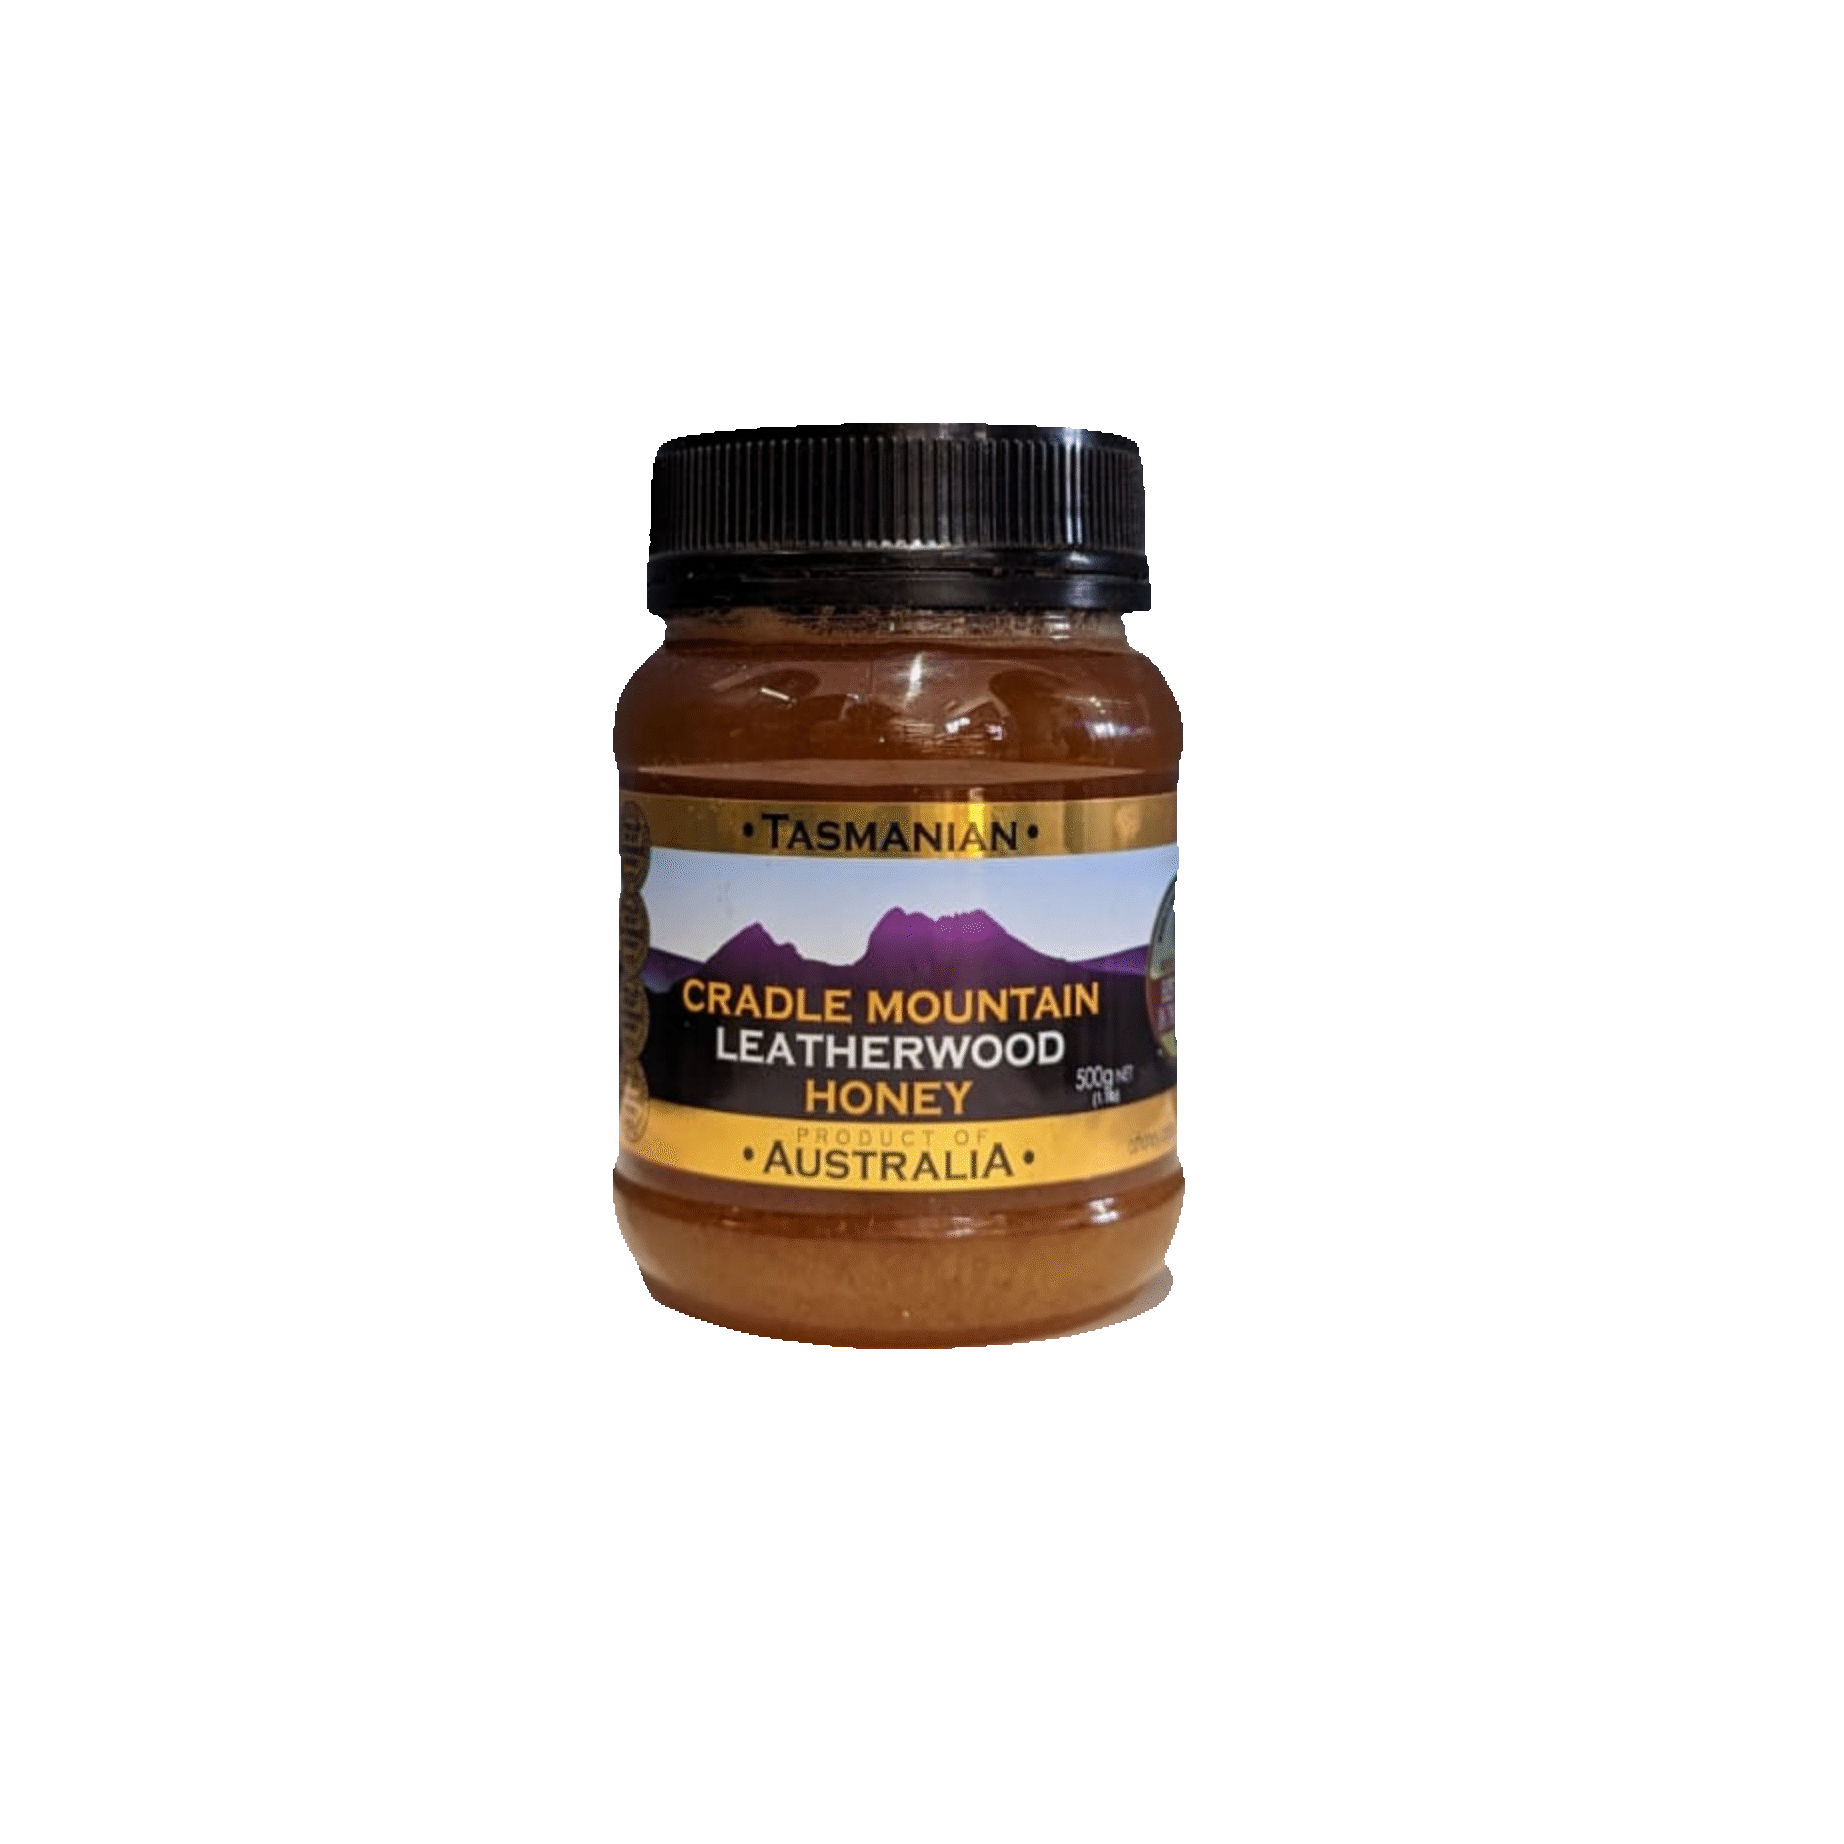 Cradle Mountain Leatherwood Honey